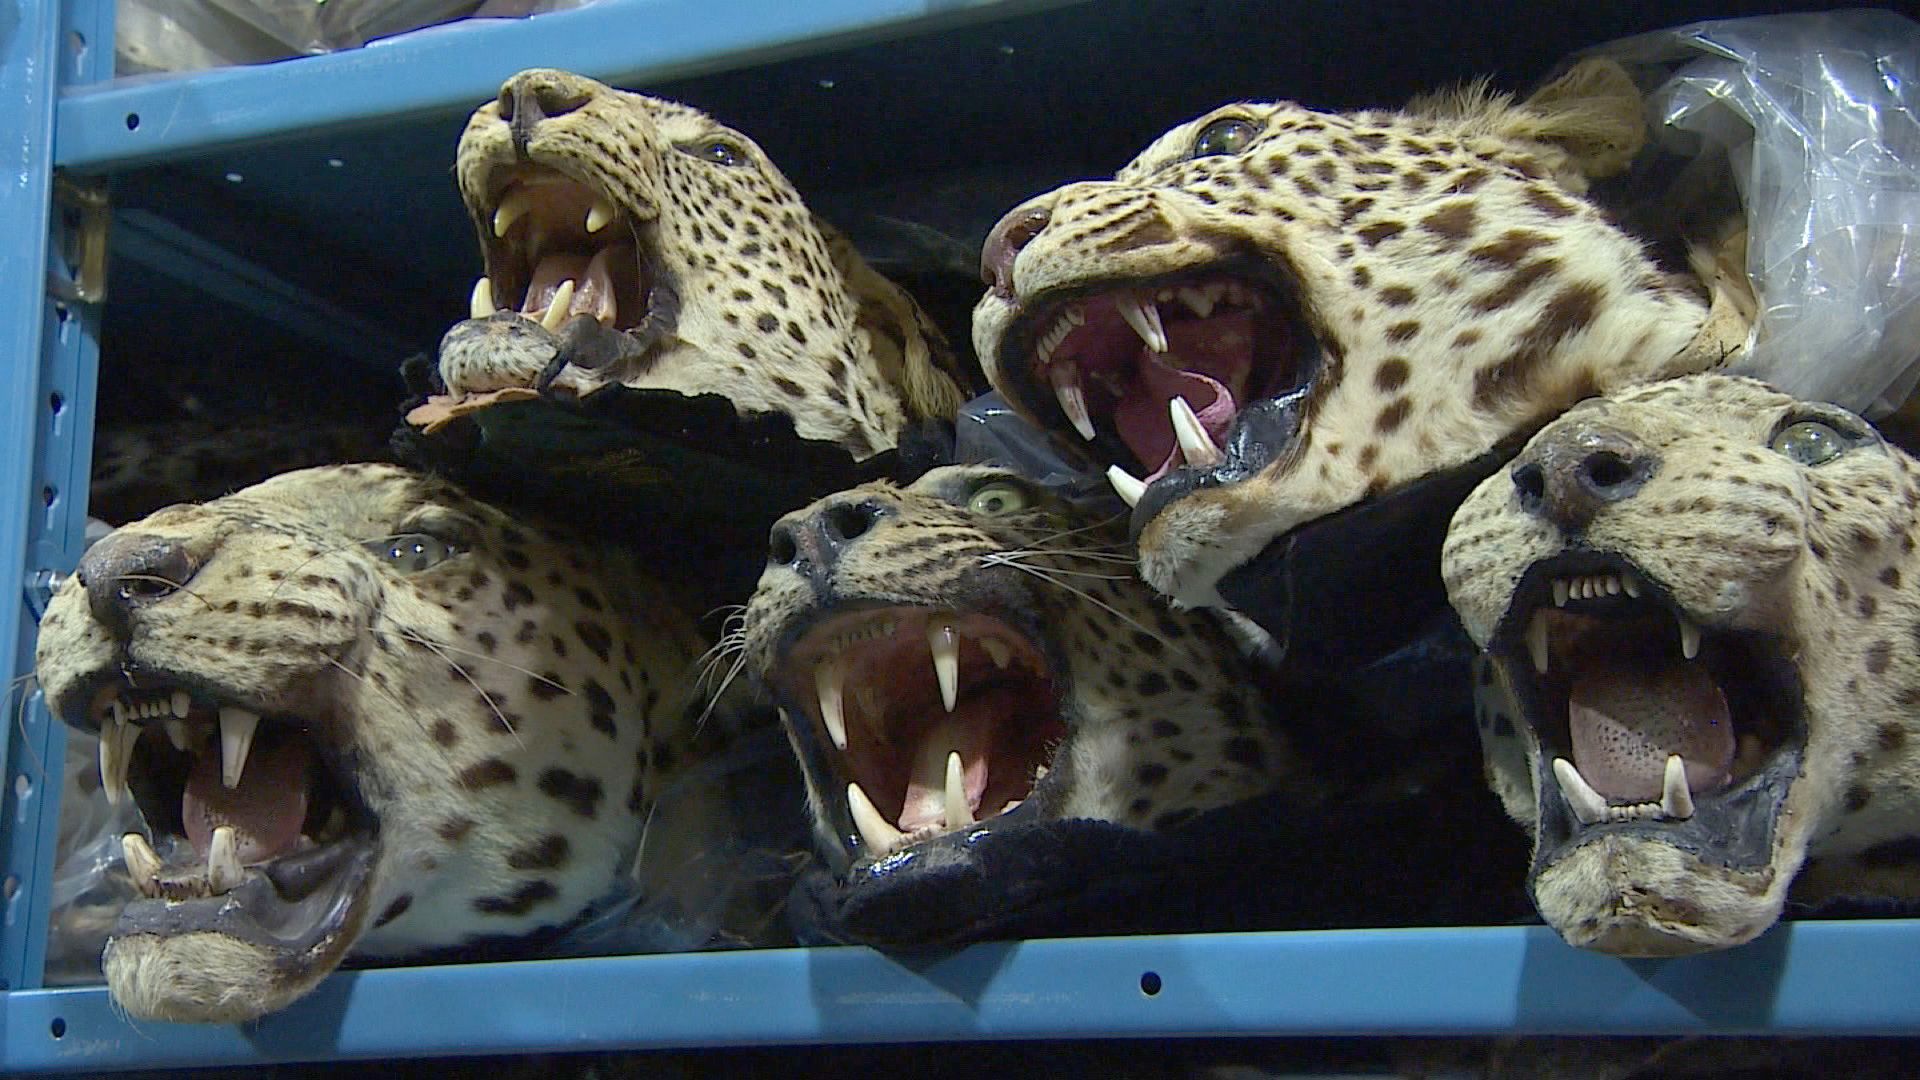 Gov. warehouse holds illegally trafficked wildlife | CNN